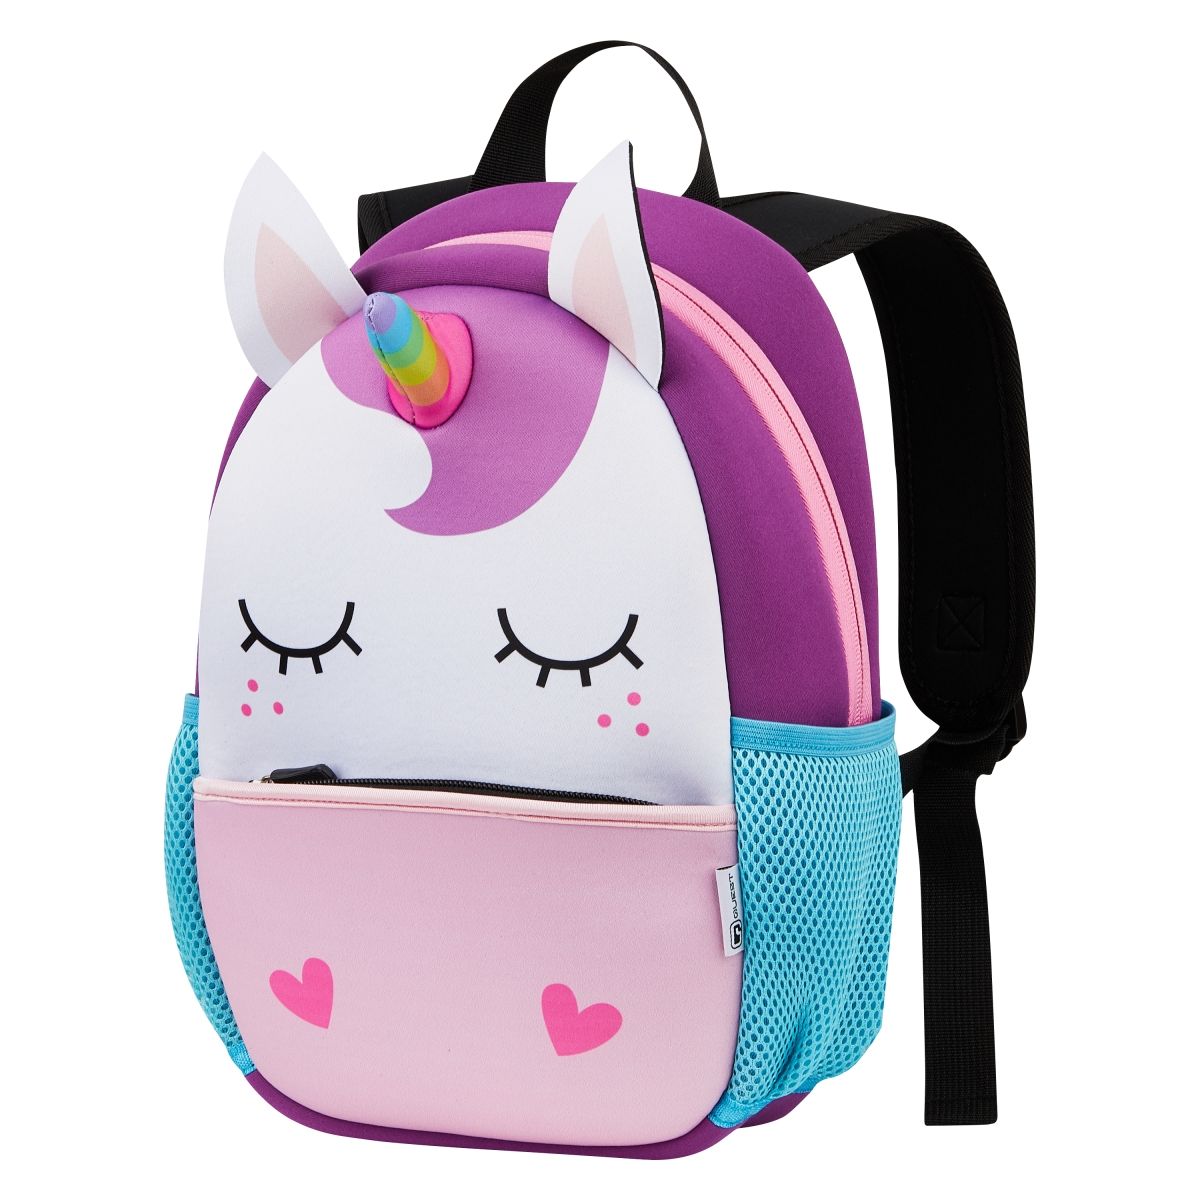 QUEST Neoprene Backpack - Unicorn | Buy Online in South Africa ...